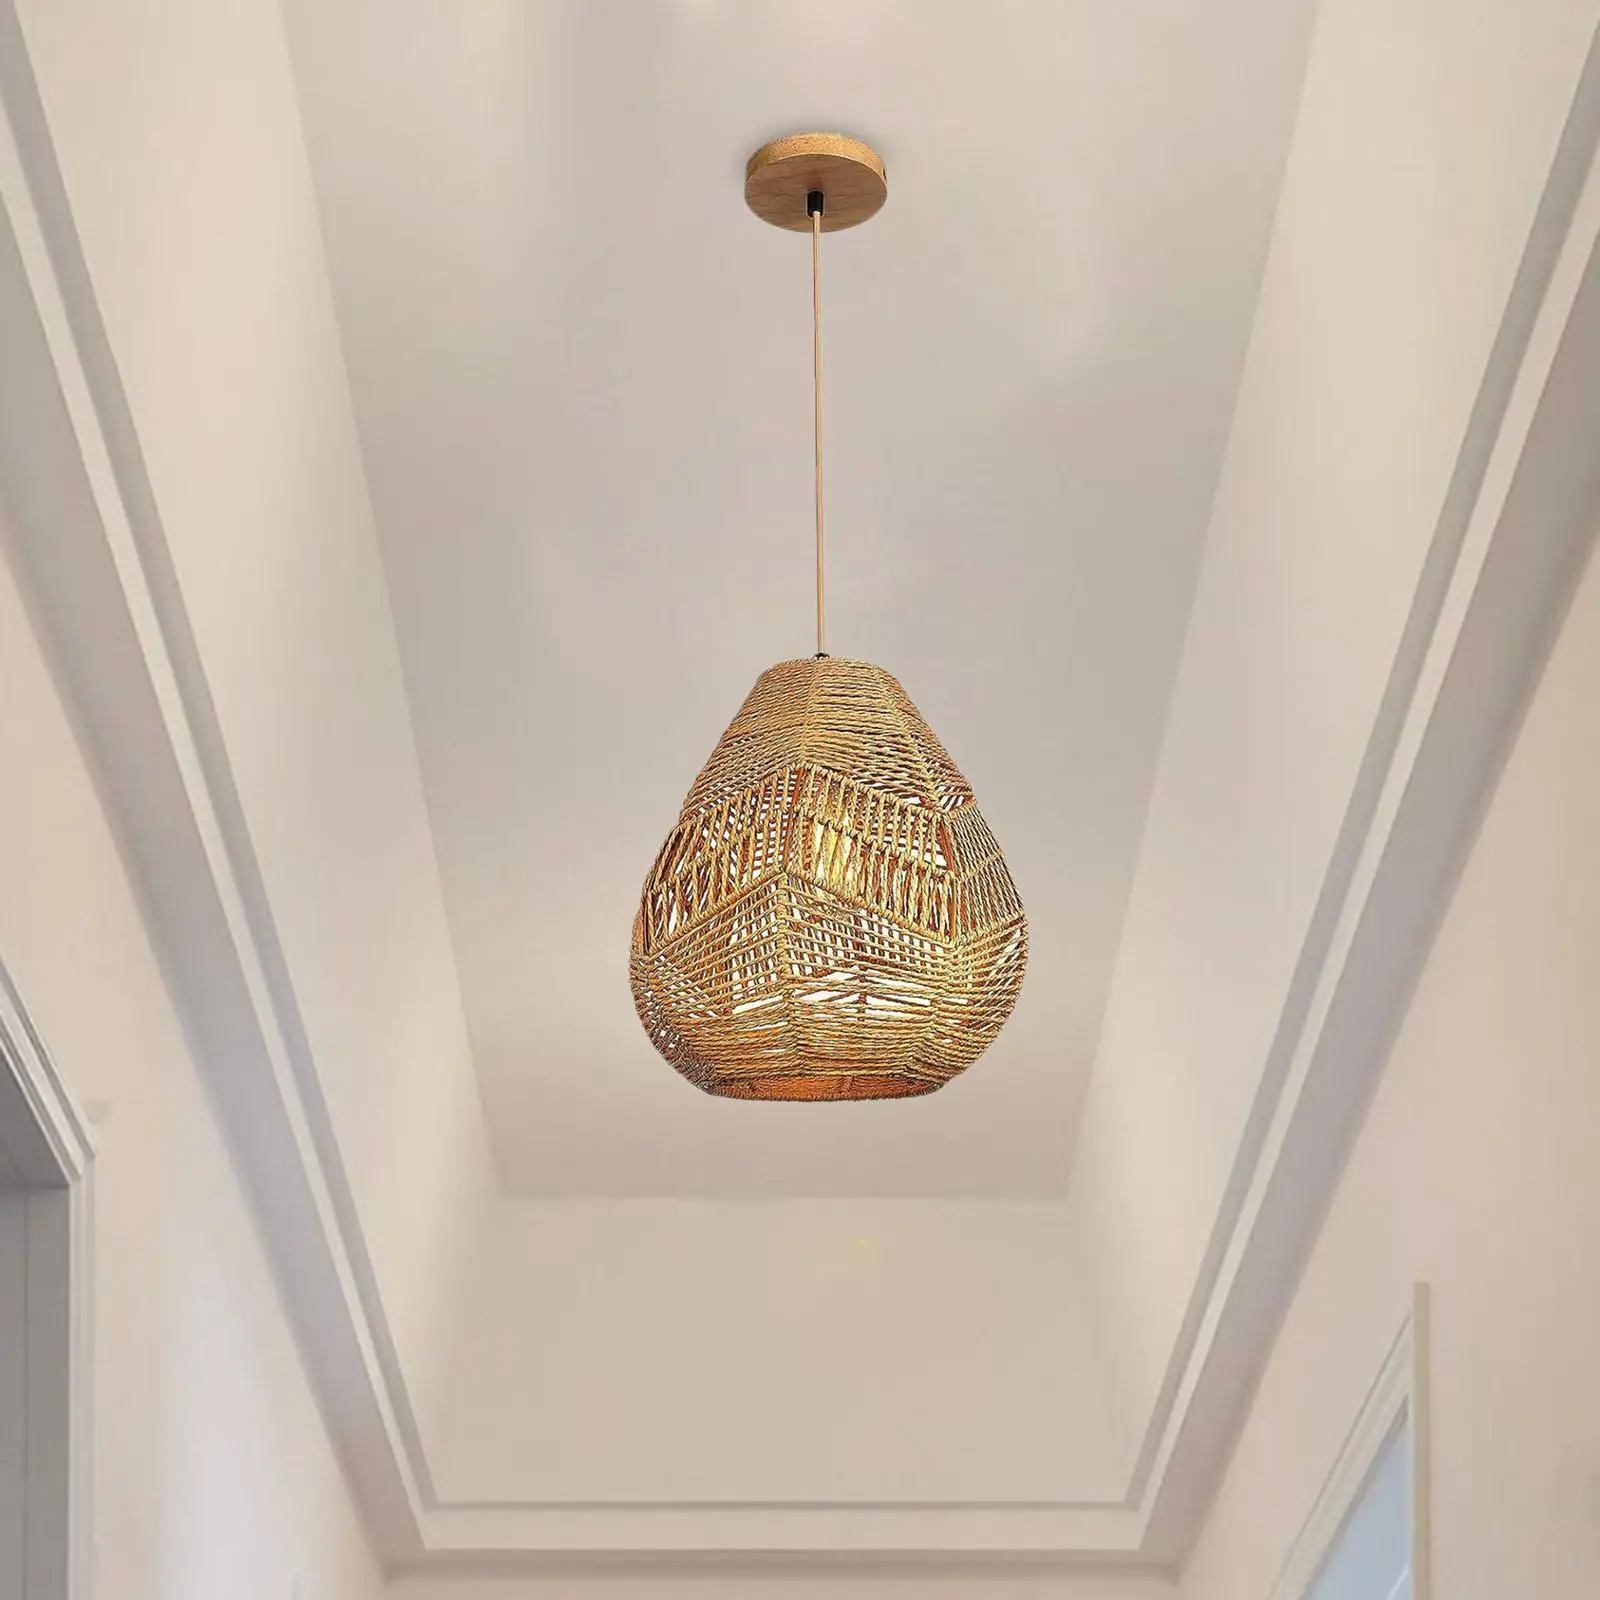 Pendant Sconce Shade Rope Lampshade Wicker Pendant Light Shade for Home Chandelier Ceiling Fan Light Bulb Hotel Pendant Light